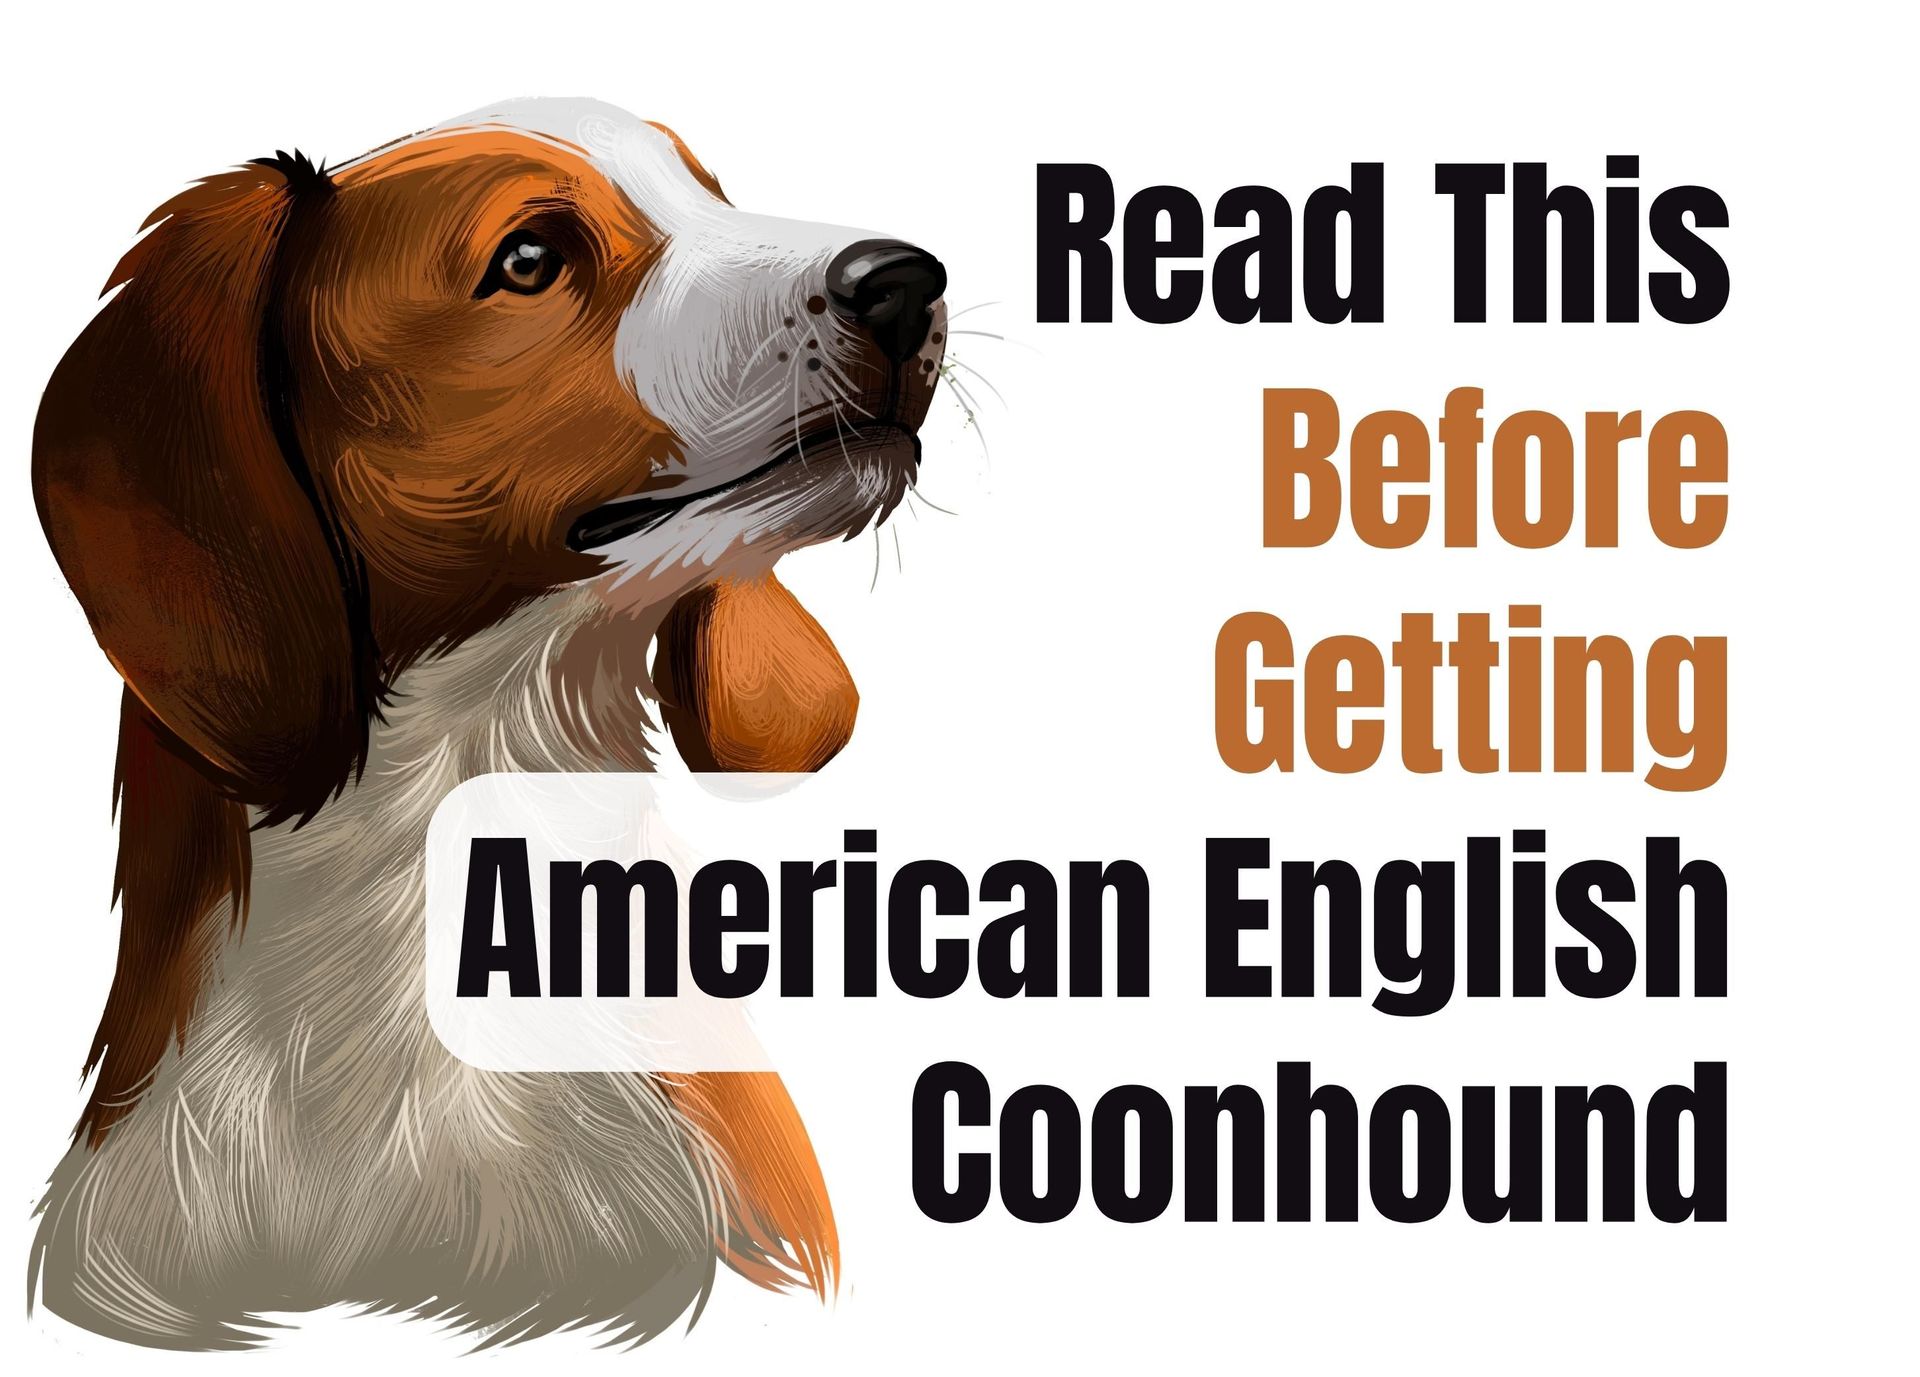 english coonhound puppies